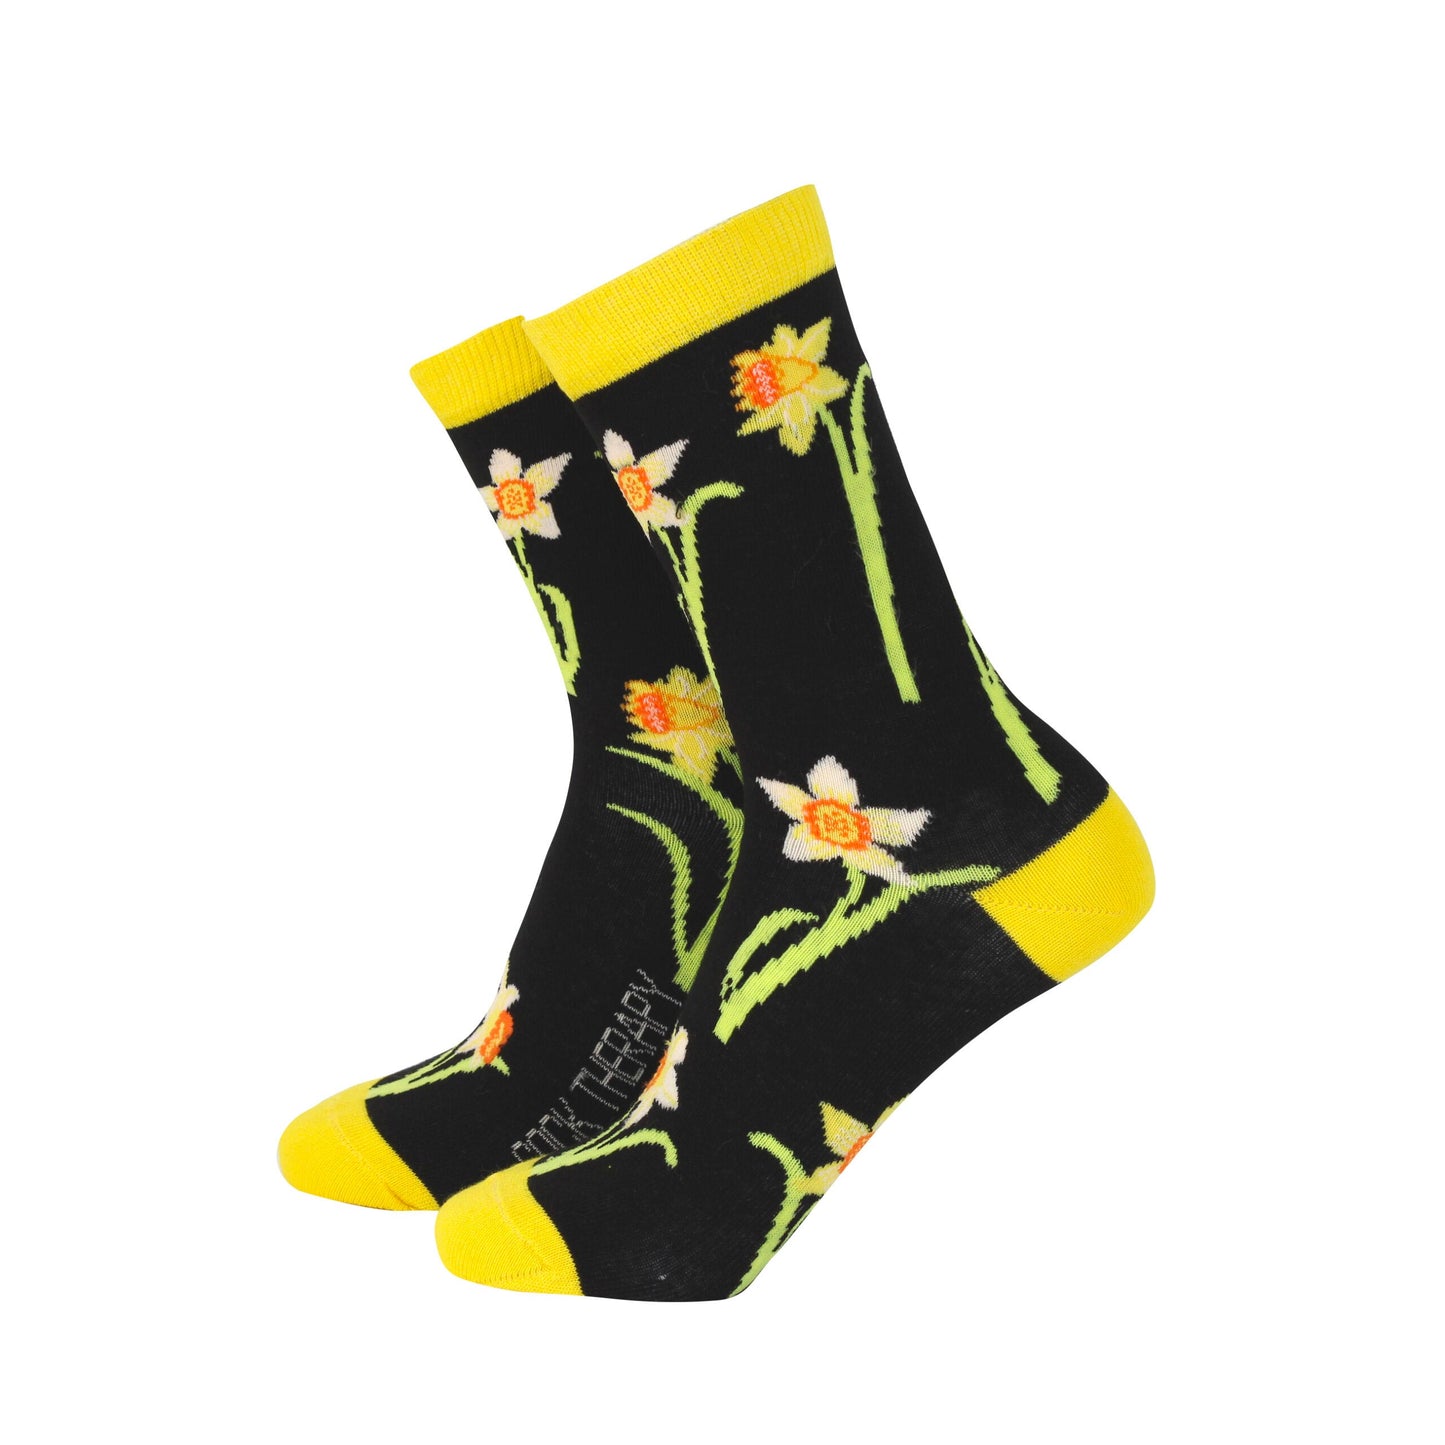 Socks - Welsh Daffodils - Ladies